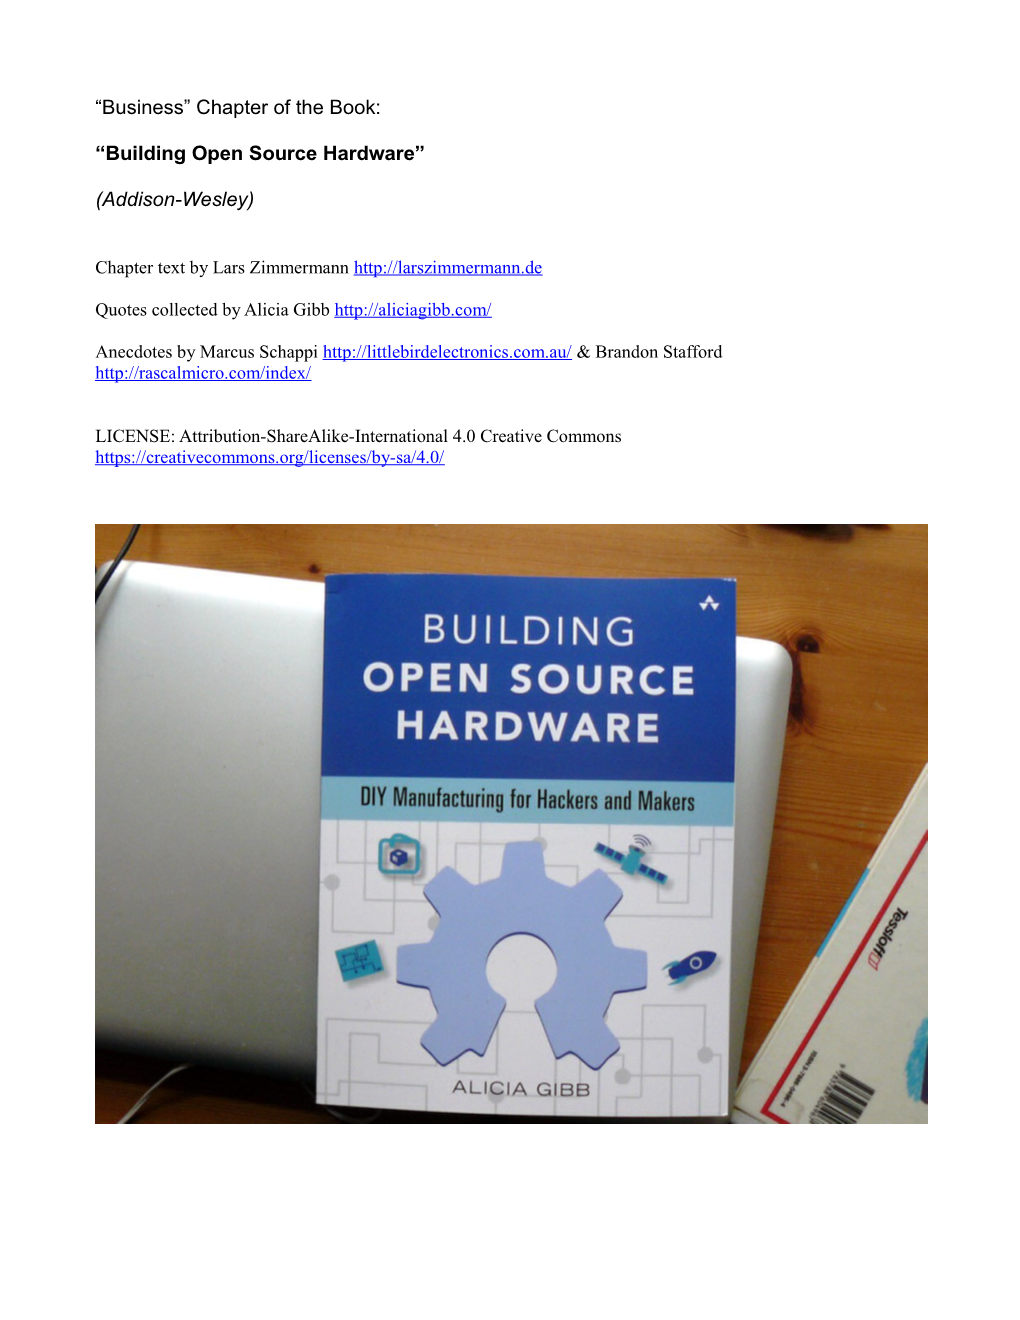 Building Open Source Hardware